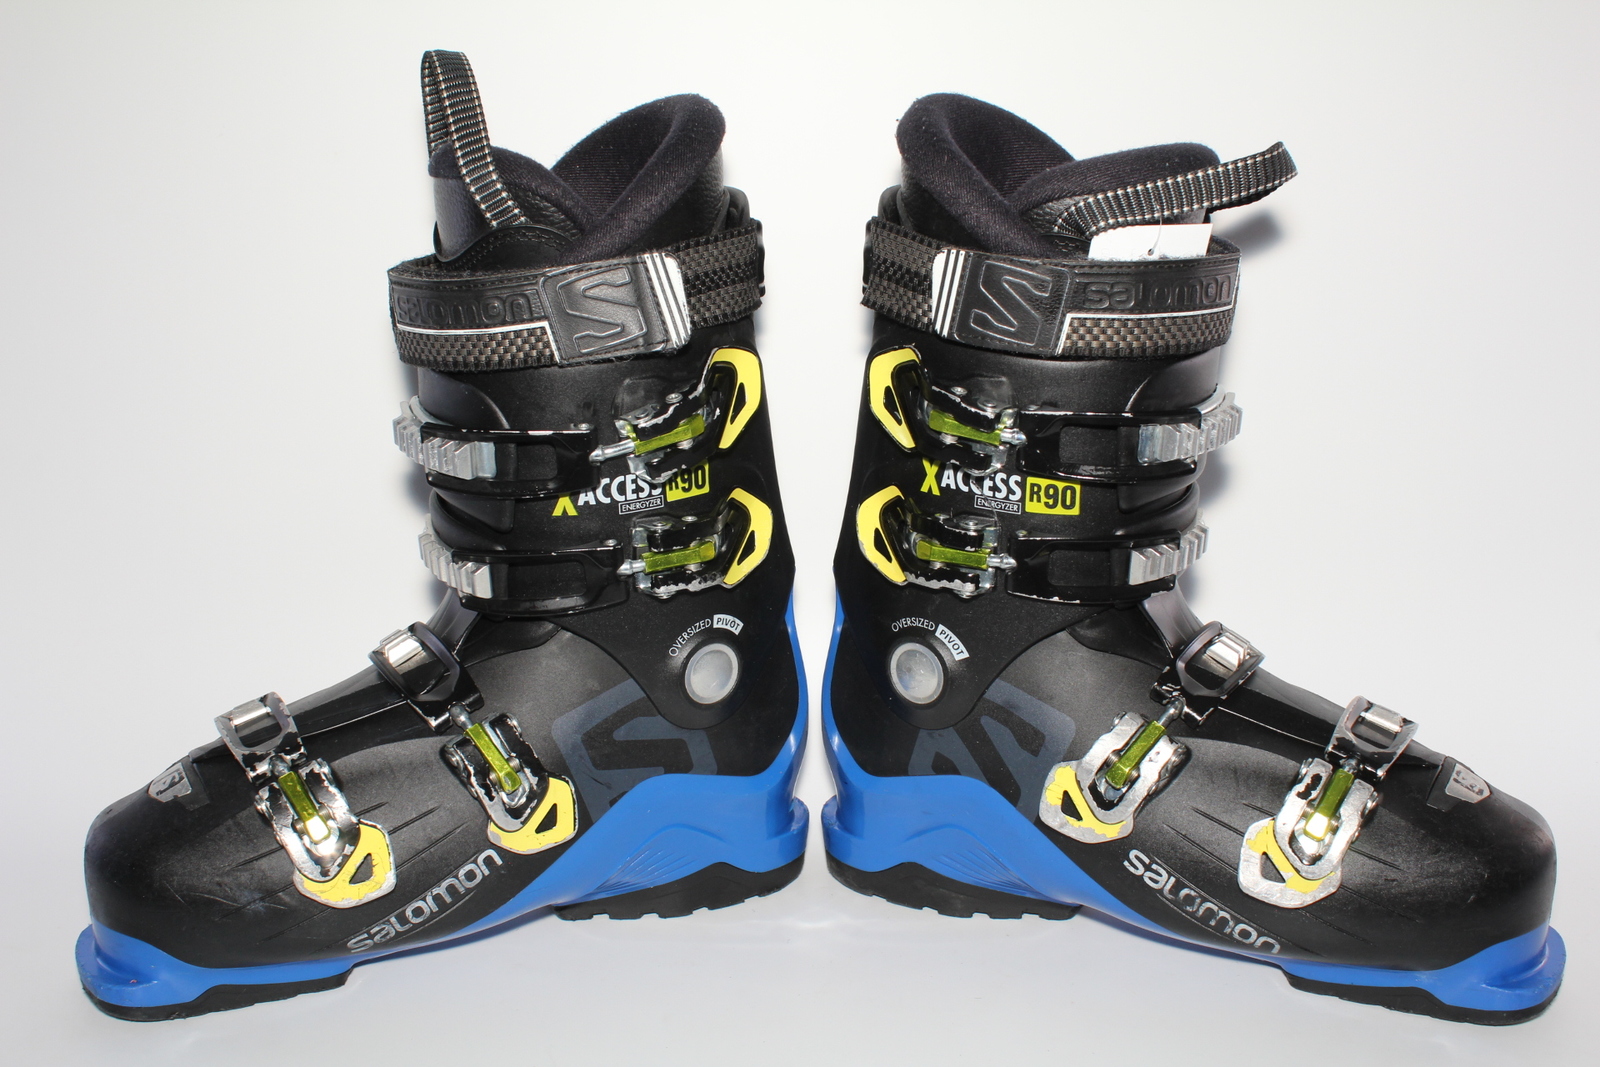 Lyžařské boty Salomon X ACCESS R90 vel. EU42 flexe 90